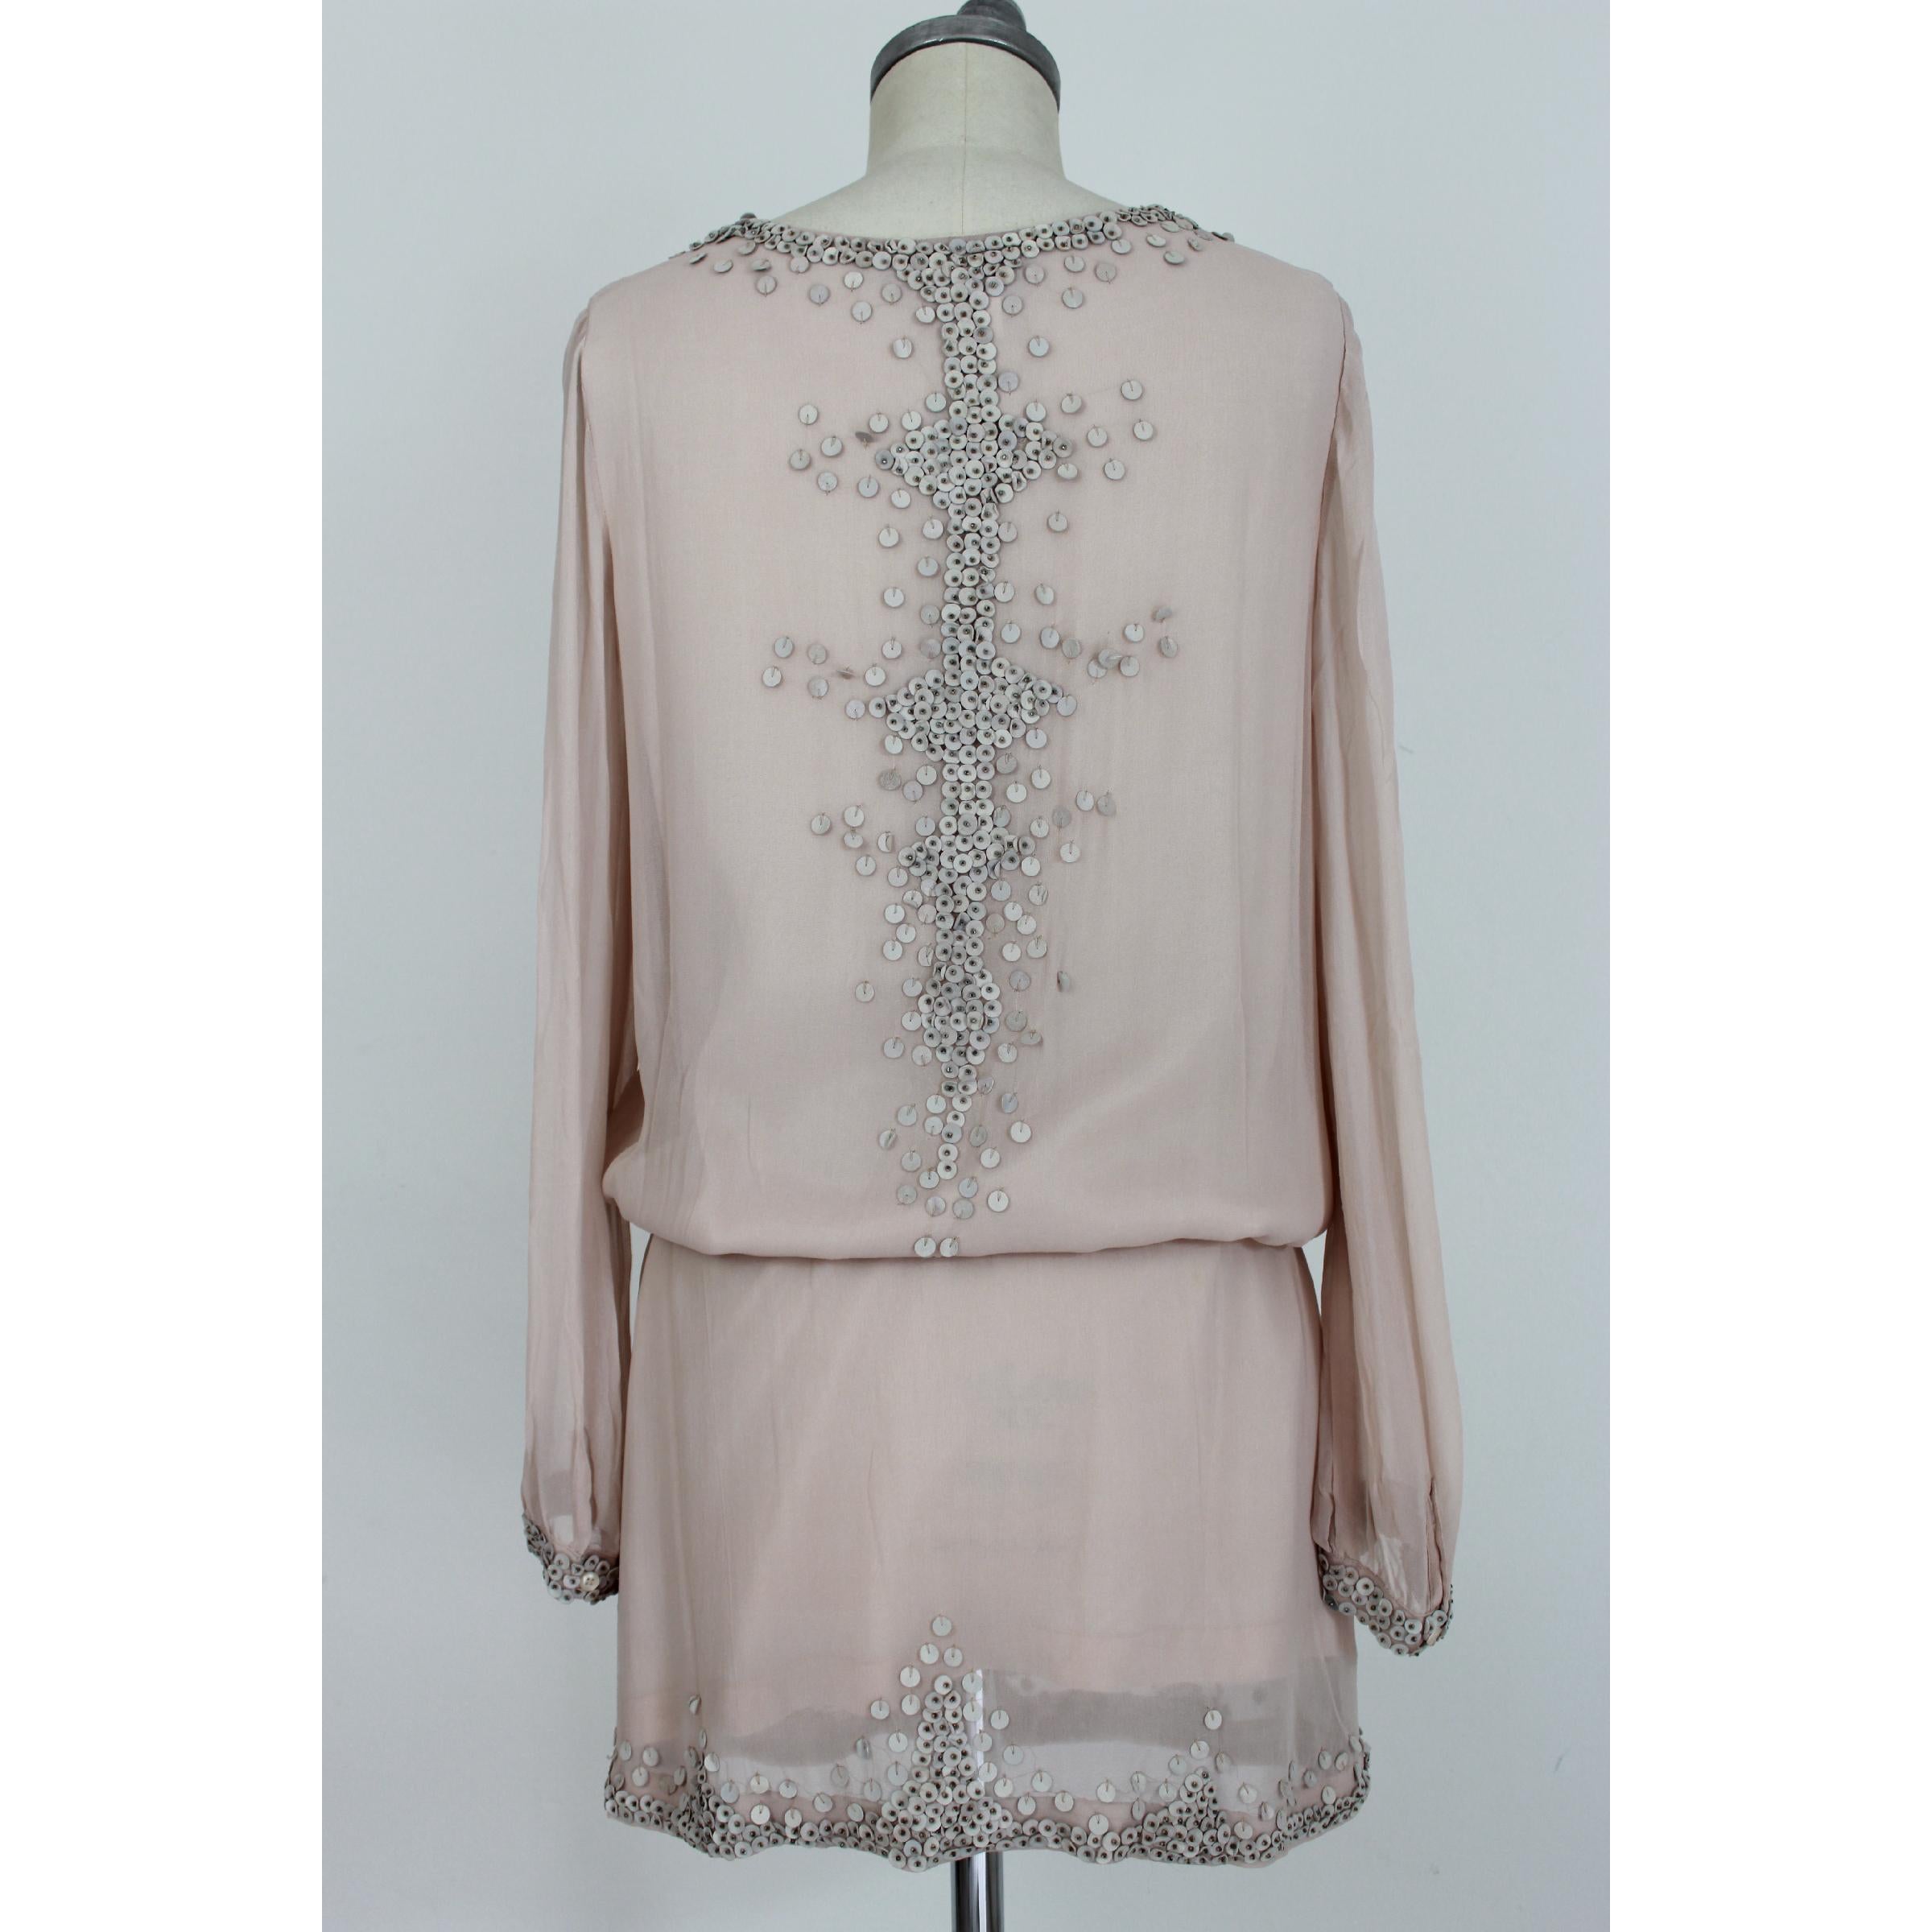 Antik Batik women's vintage short dress. Powder pink color, 100% silk, applications sewn by hand 100% leather. V-neckline, elasticated waist belt, lined. 1990s. Designed in France, Made in India. Excellent vintage condition.

Size: 42 It 8 Us 10